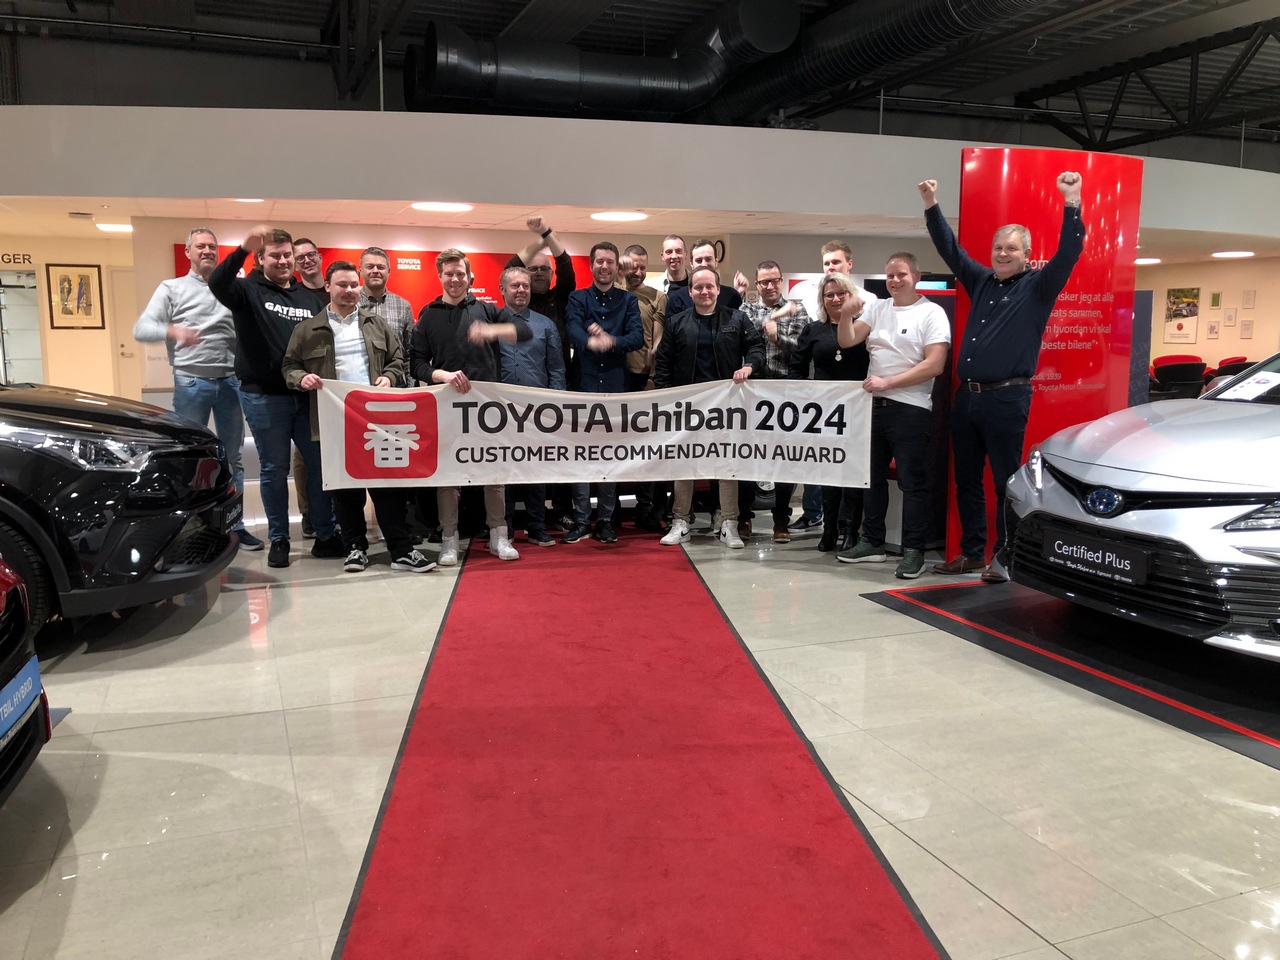 Bøgh Hafsø Bilforretning i Egersund er vinneren av årets Toyota Ichiban-pris